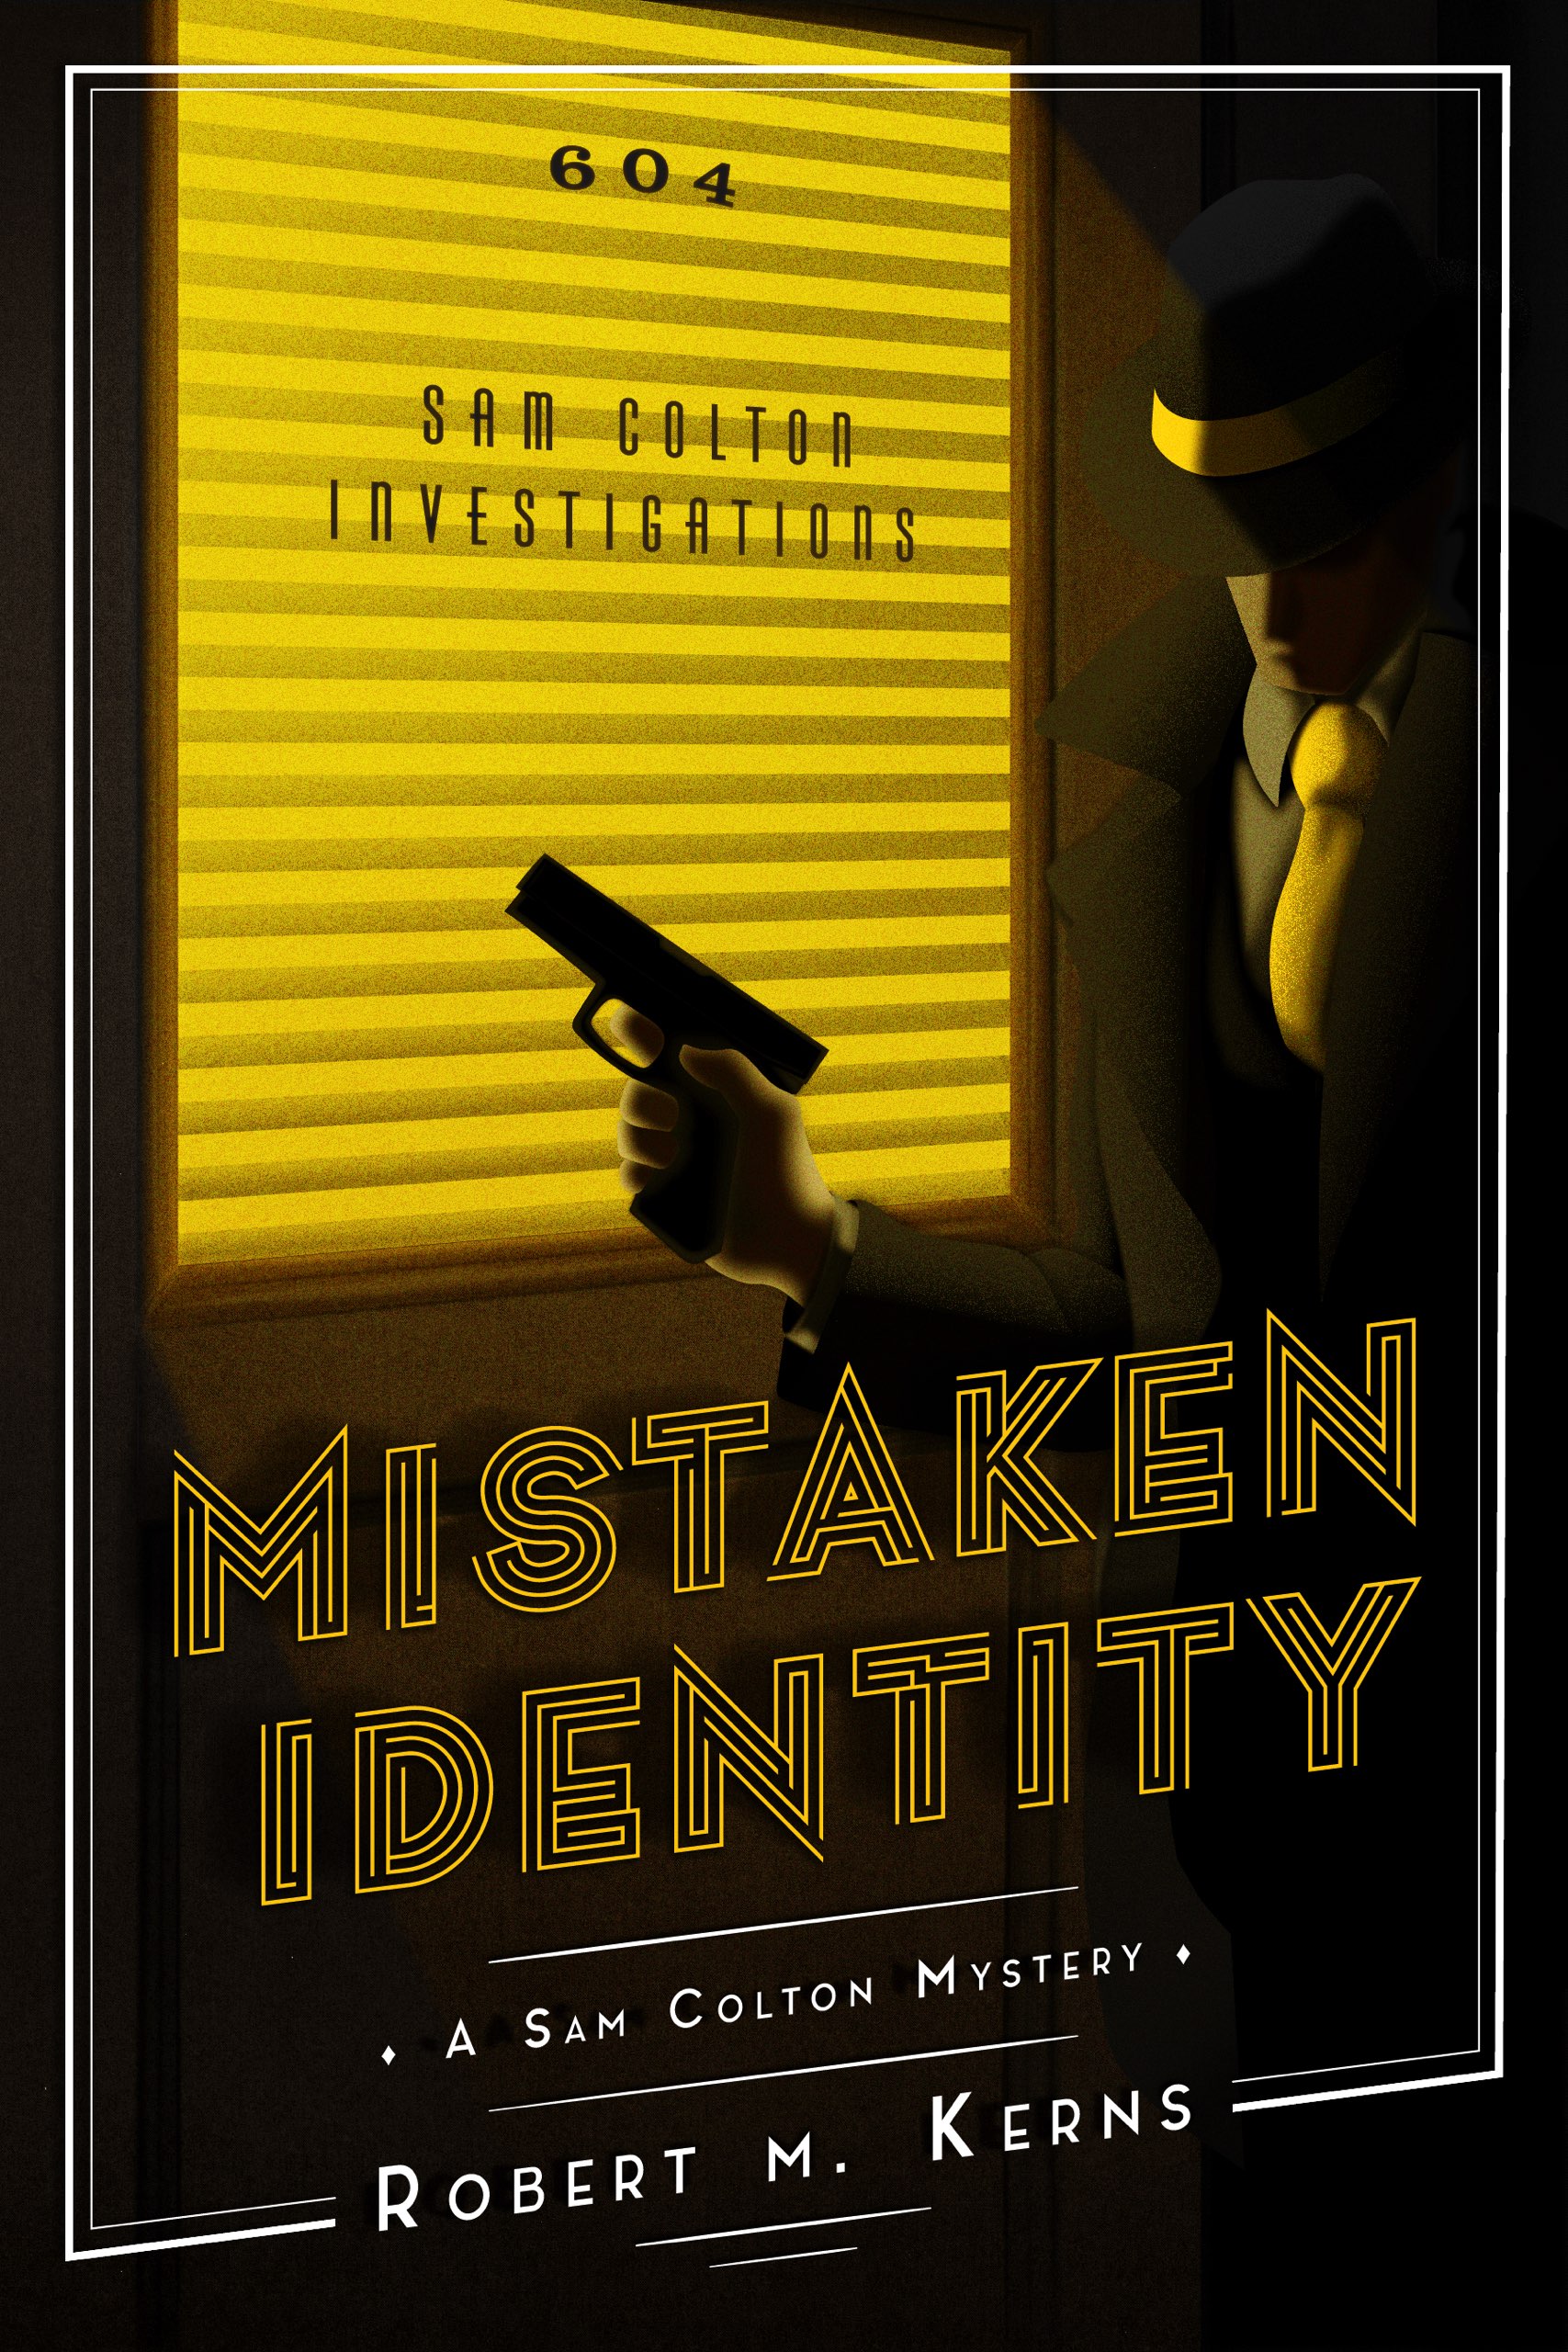 Mistaken Identity by Robert M. Kerns